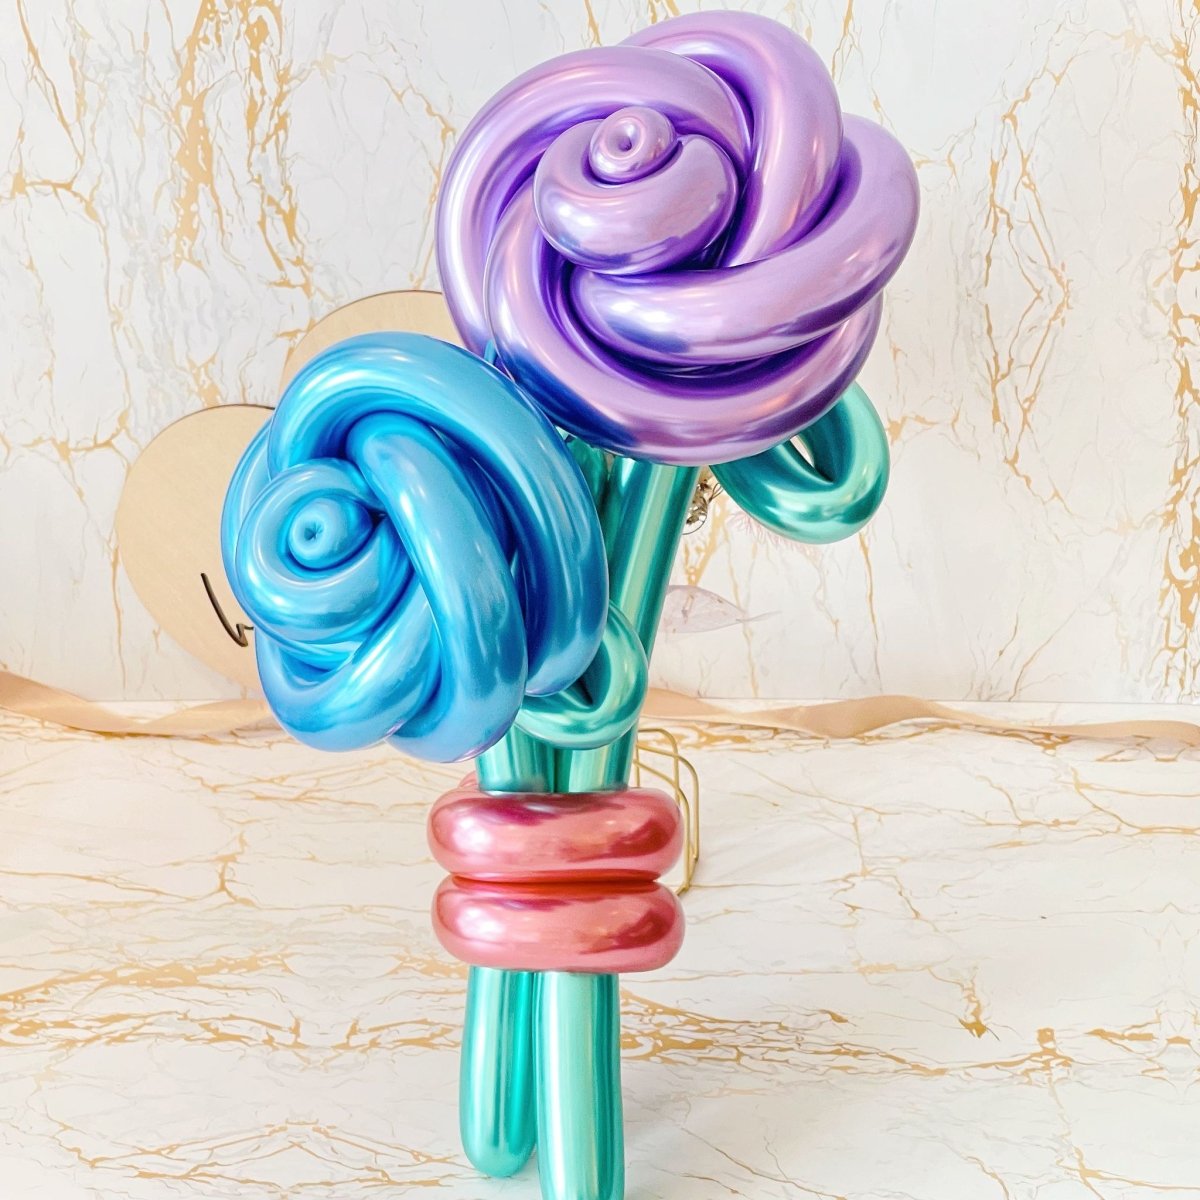 Luxurious Jumbo Rose Balloon Flower Bouquet - Rainbowly Fresh Fruit Gift and Flower Arrangments